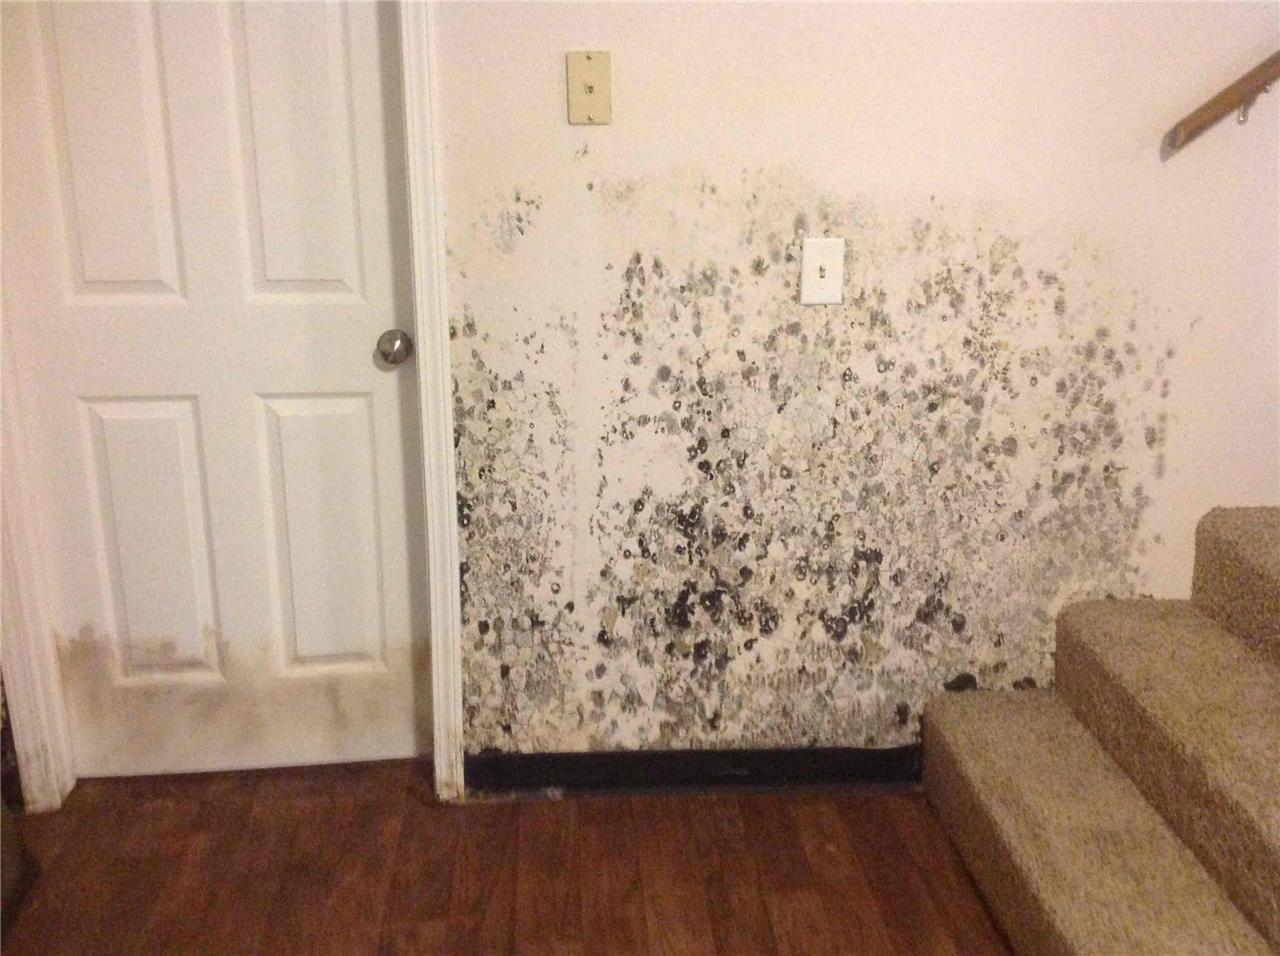 Black Mold on Wall and Door